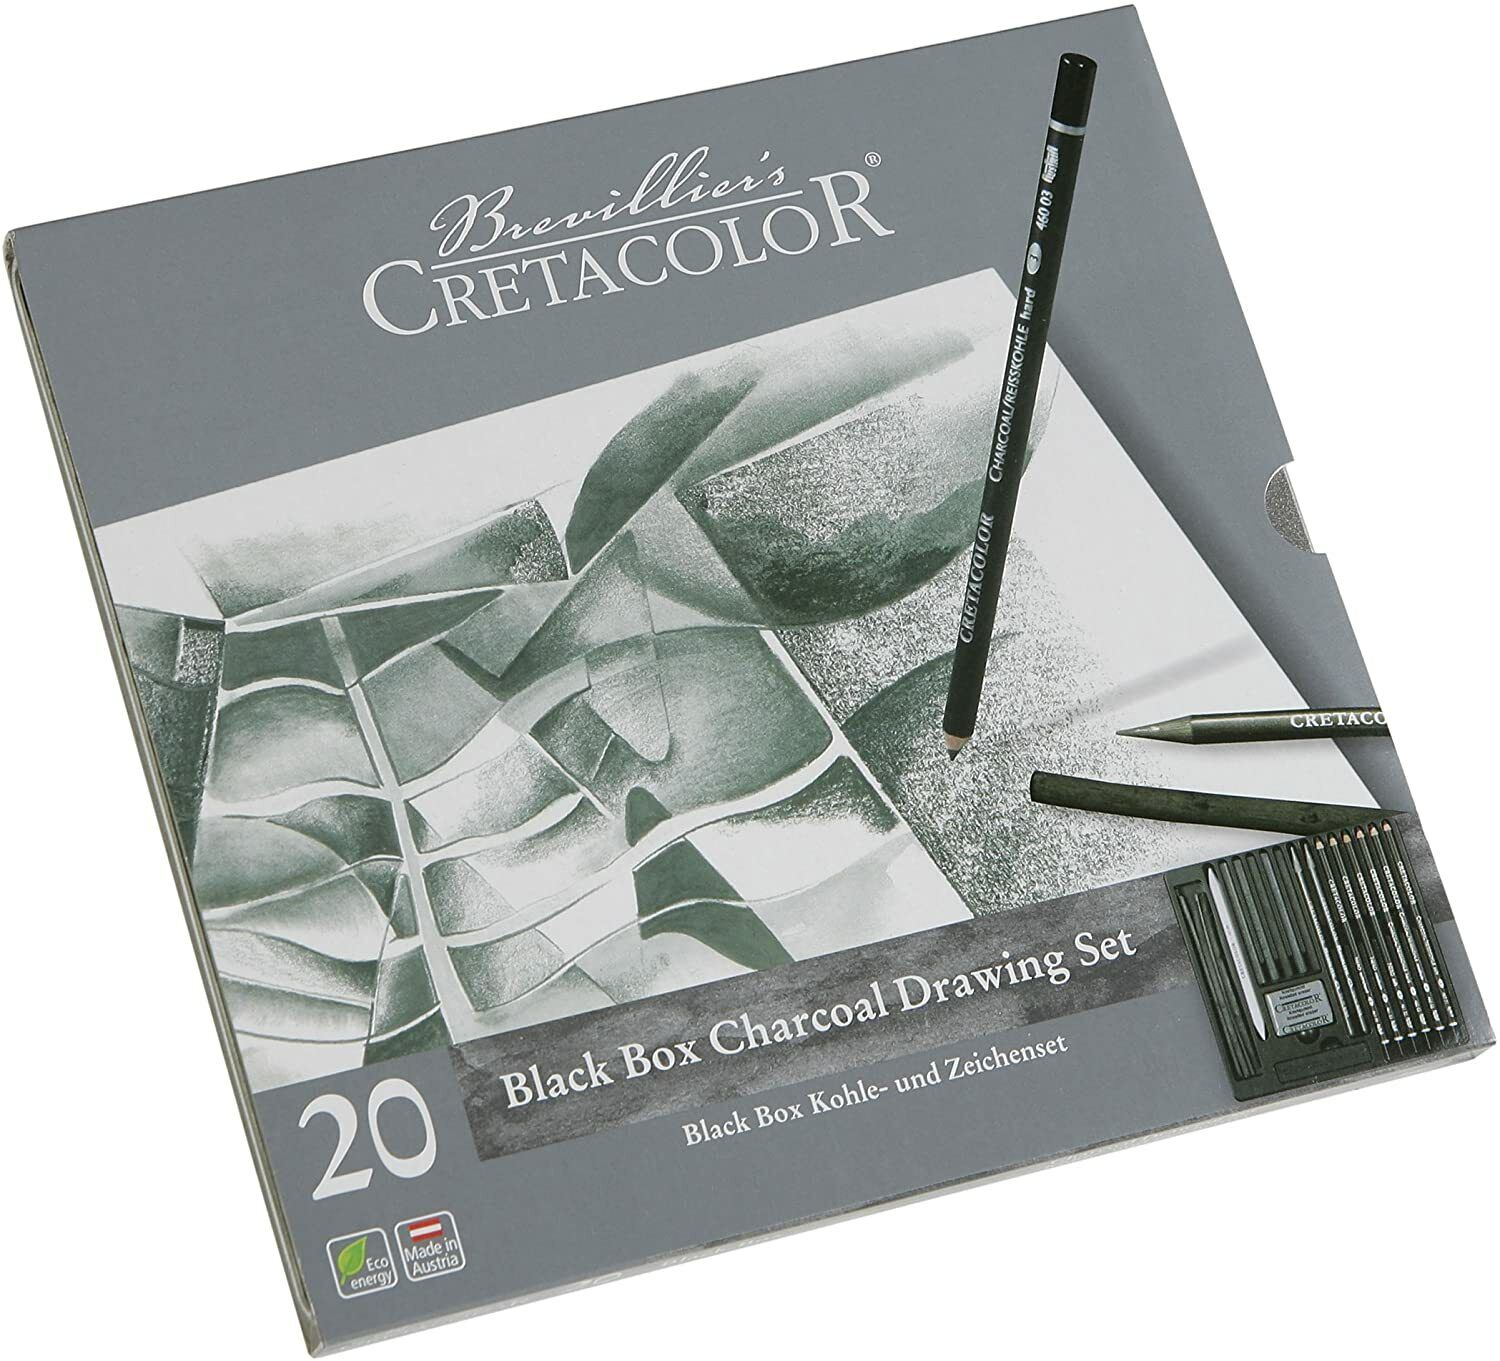 Brevillier Cretacolor Black Box Tin Charcoal Drawing Set of 20